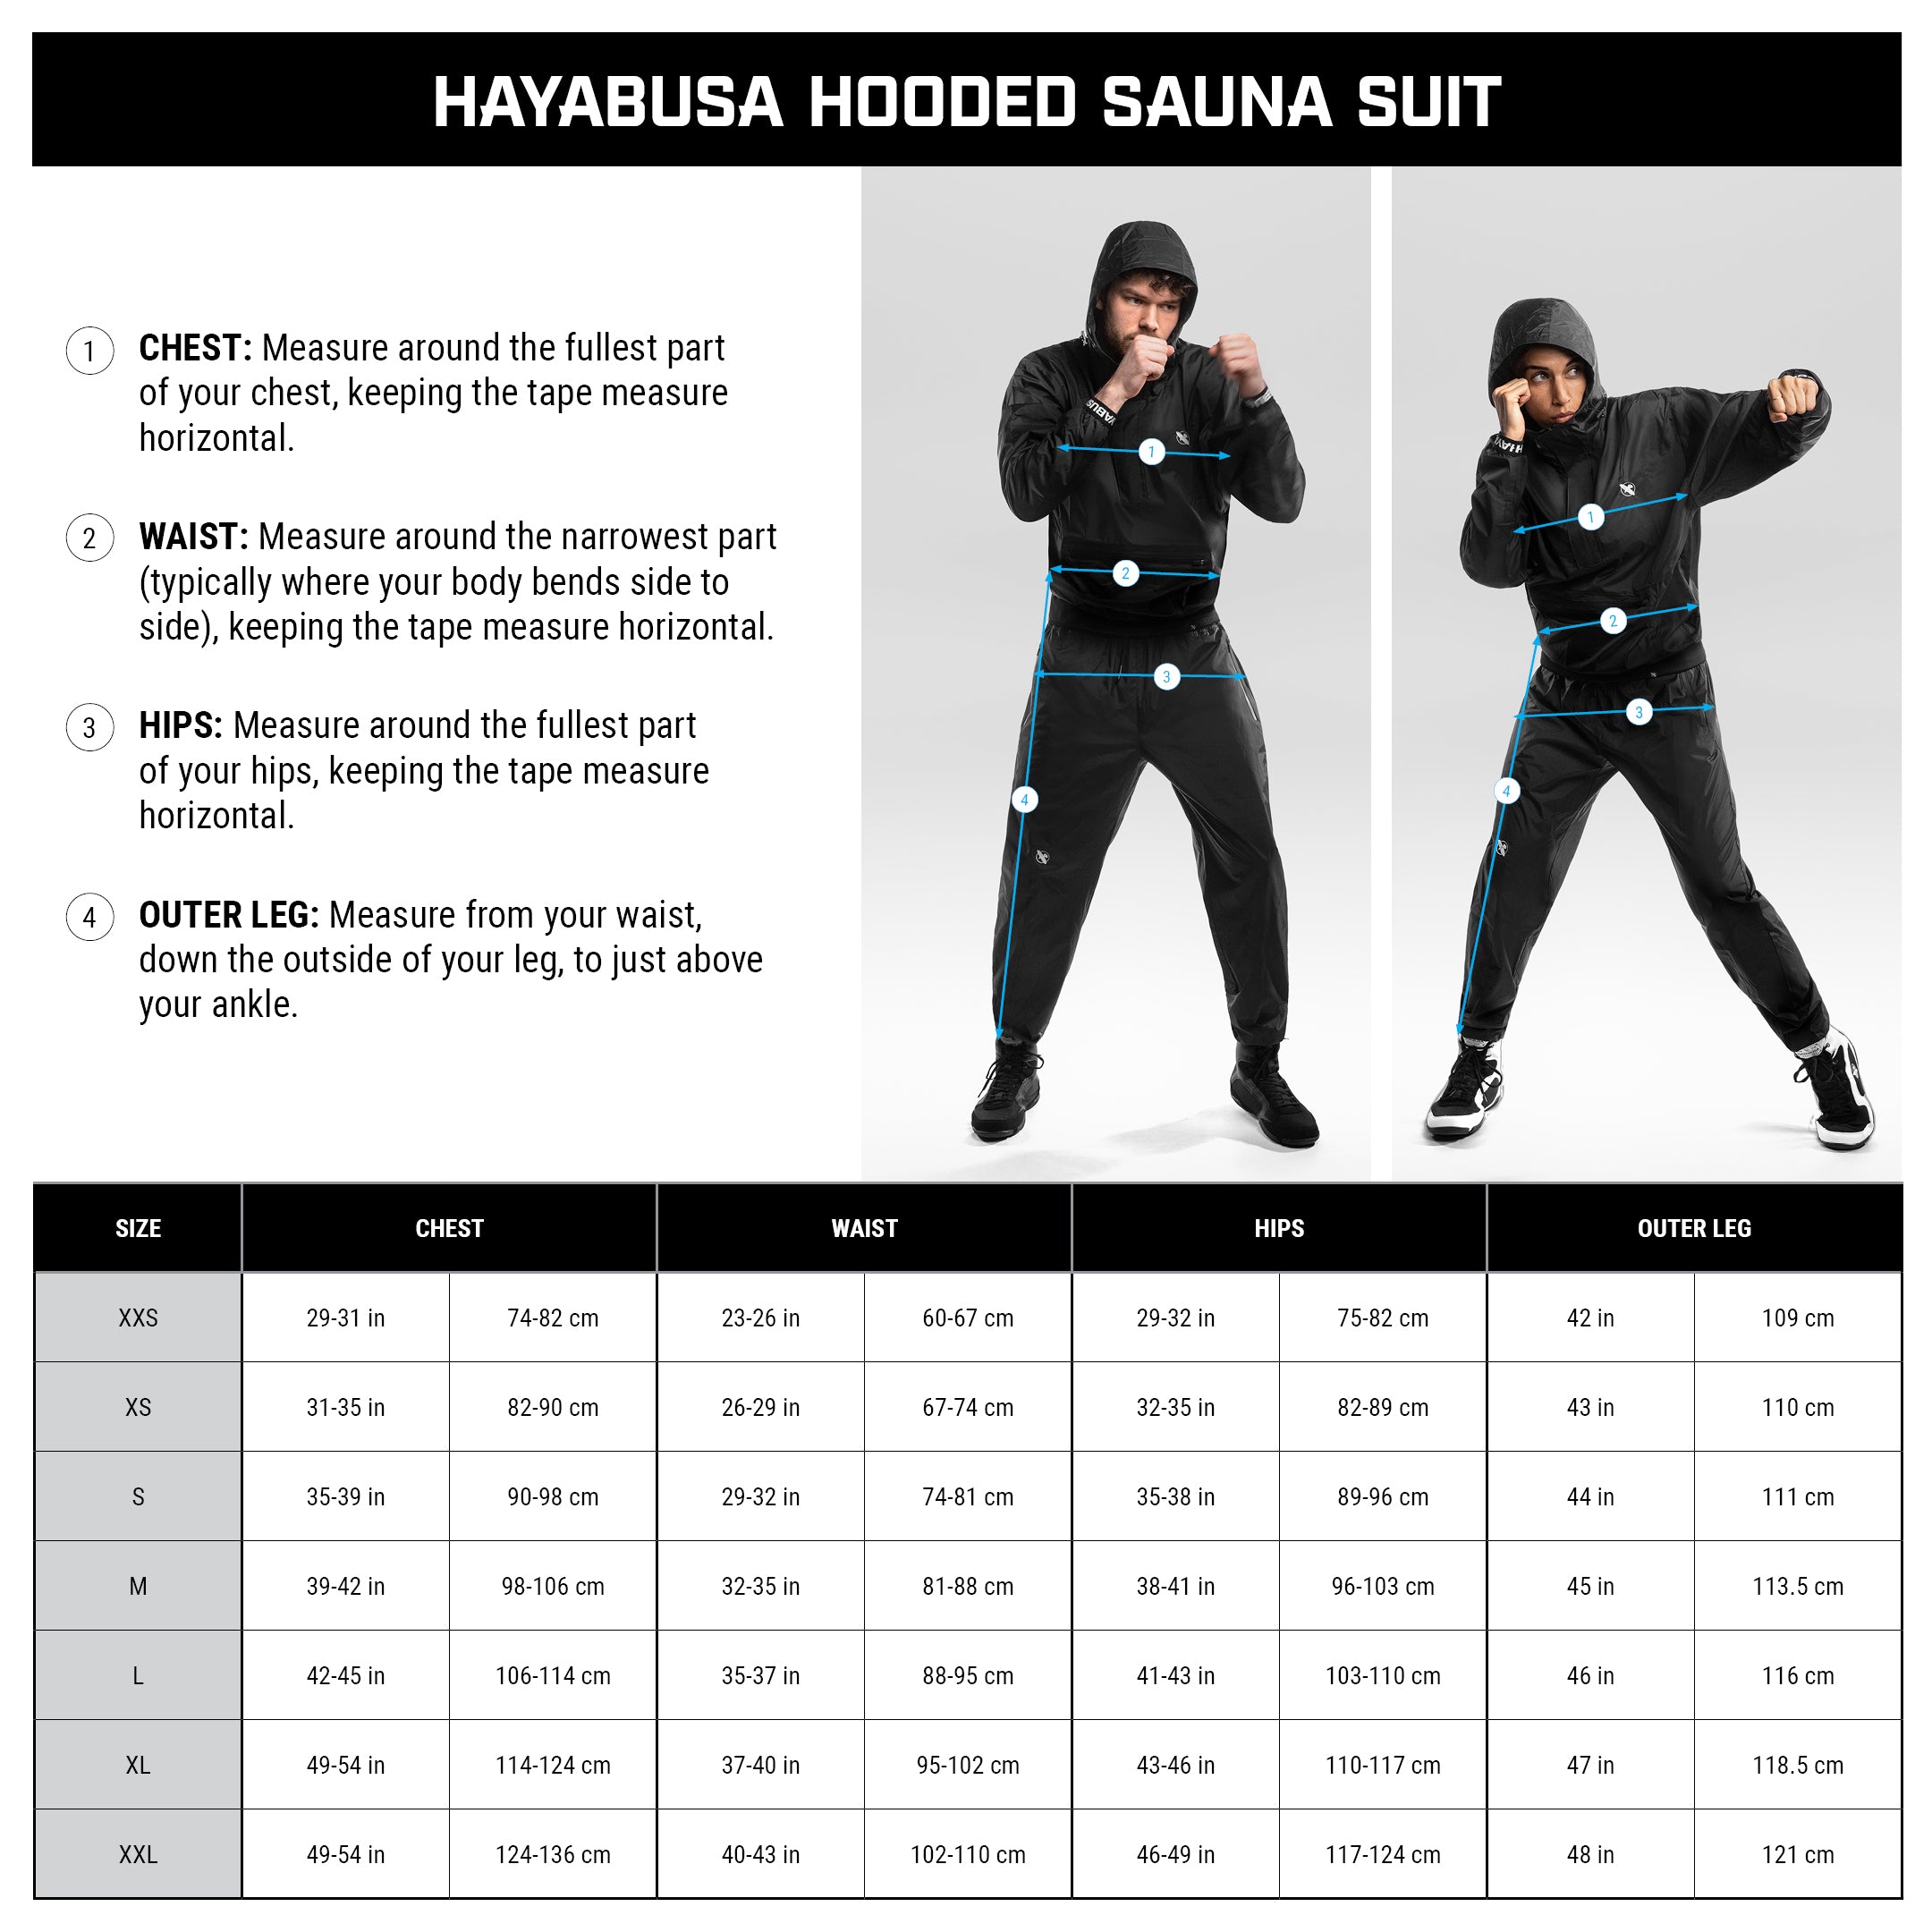 Hayabusa, Pro Hooded Sauna Suit